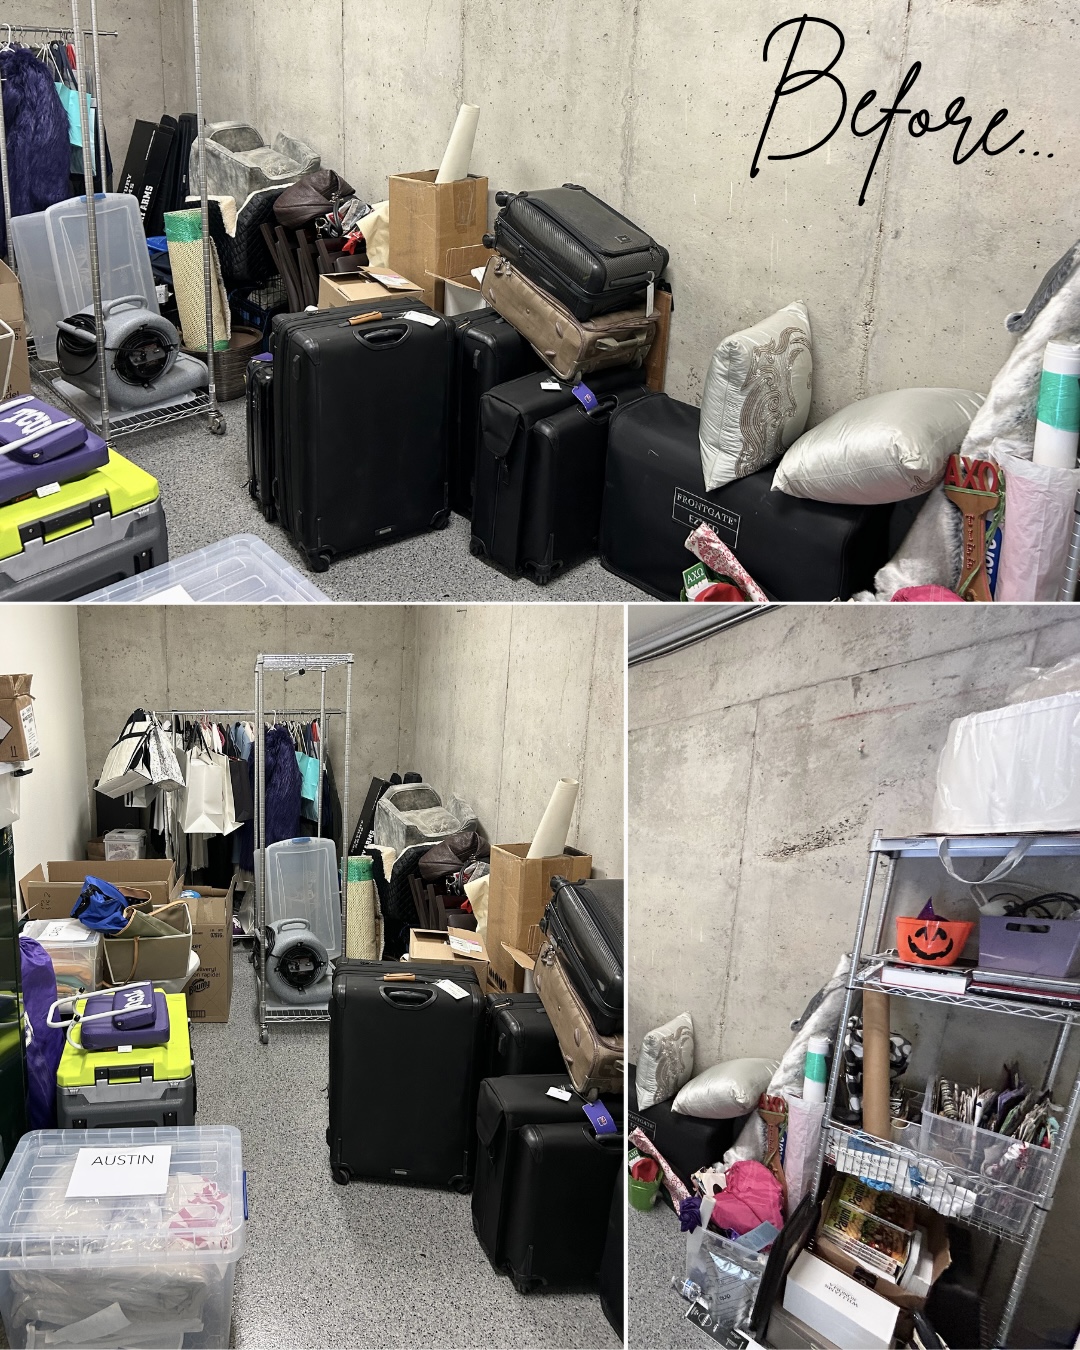 Storage Room Organization: How to Best Utilize Your Space!
#storage #organization #declutter #storageroom #organize